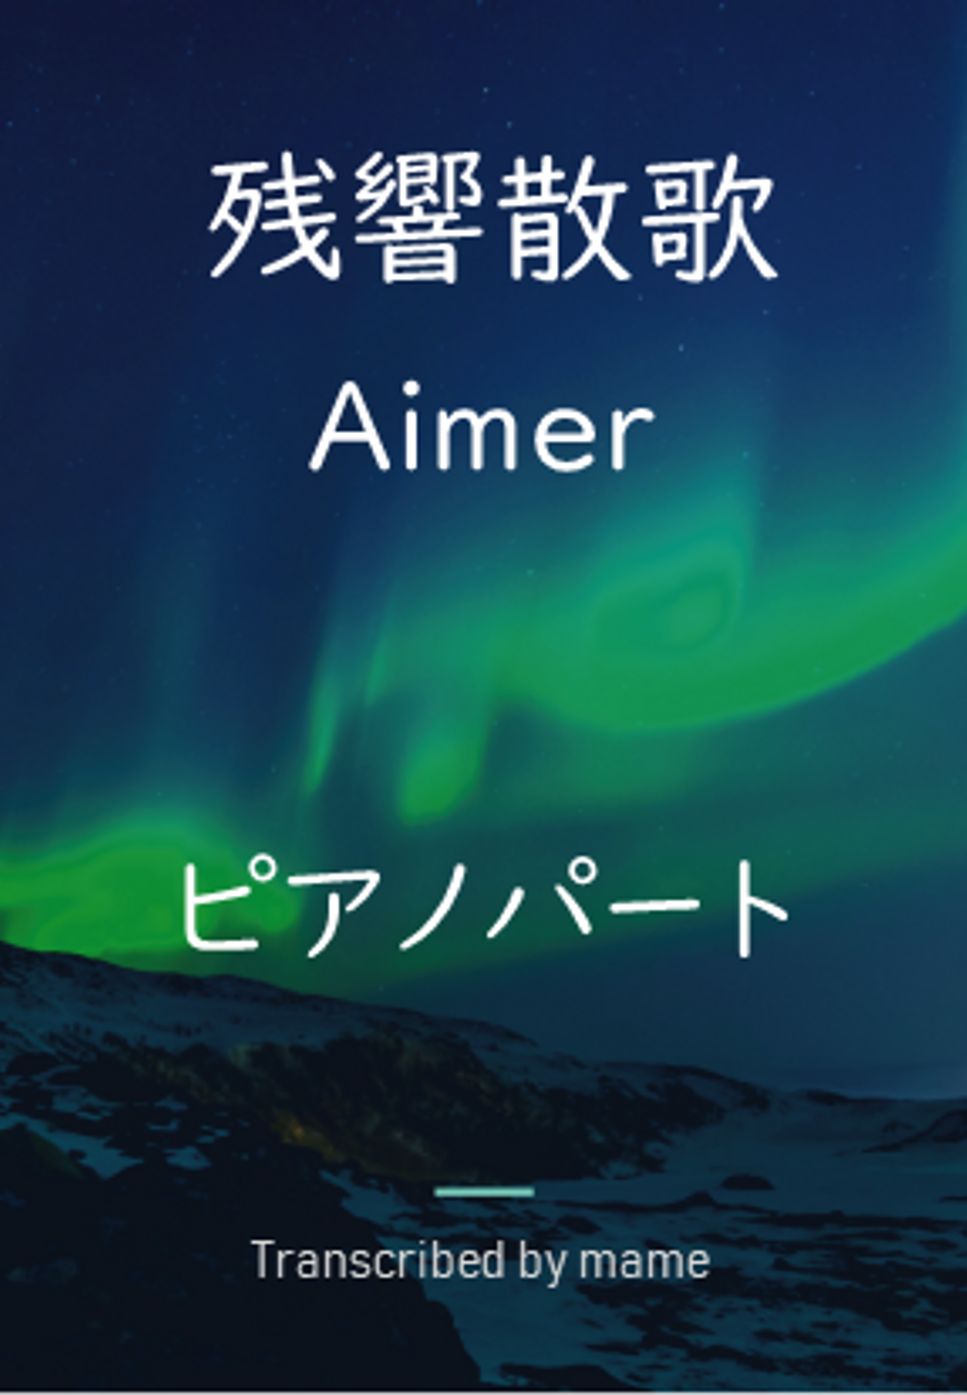 Aimer - 残響散歌 (ピアノパート) by mame